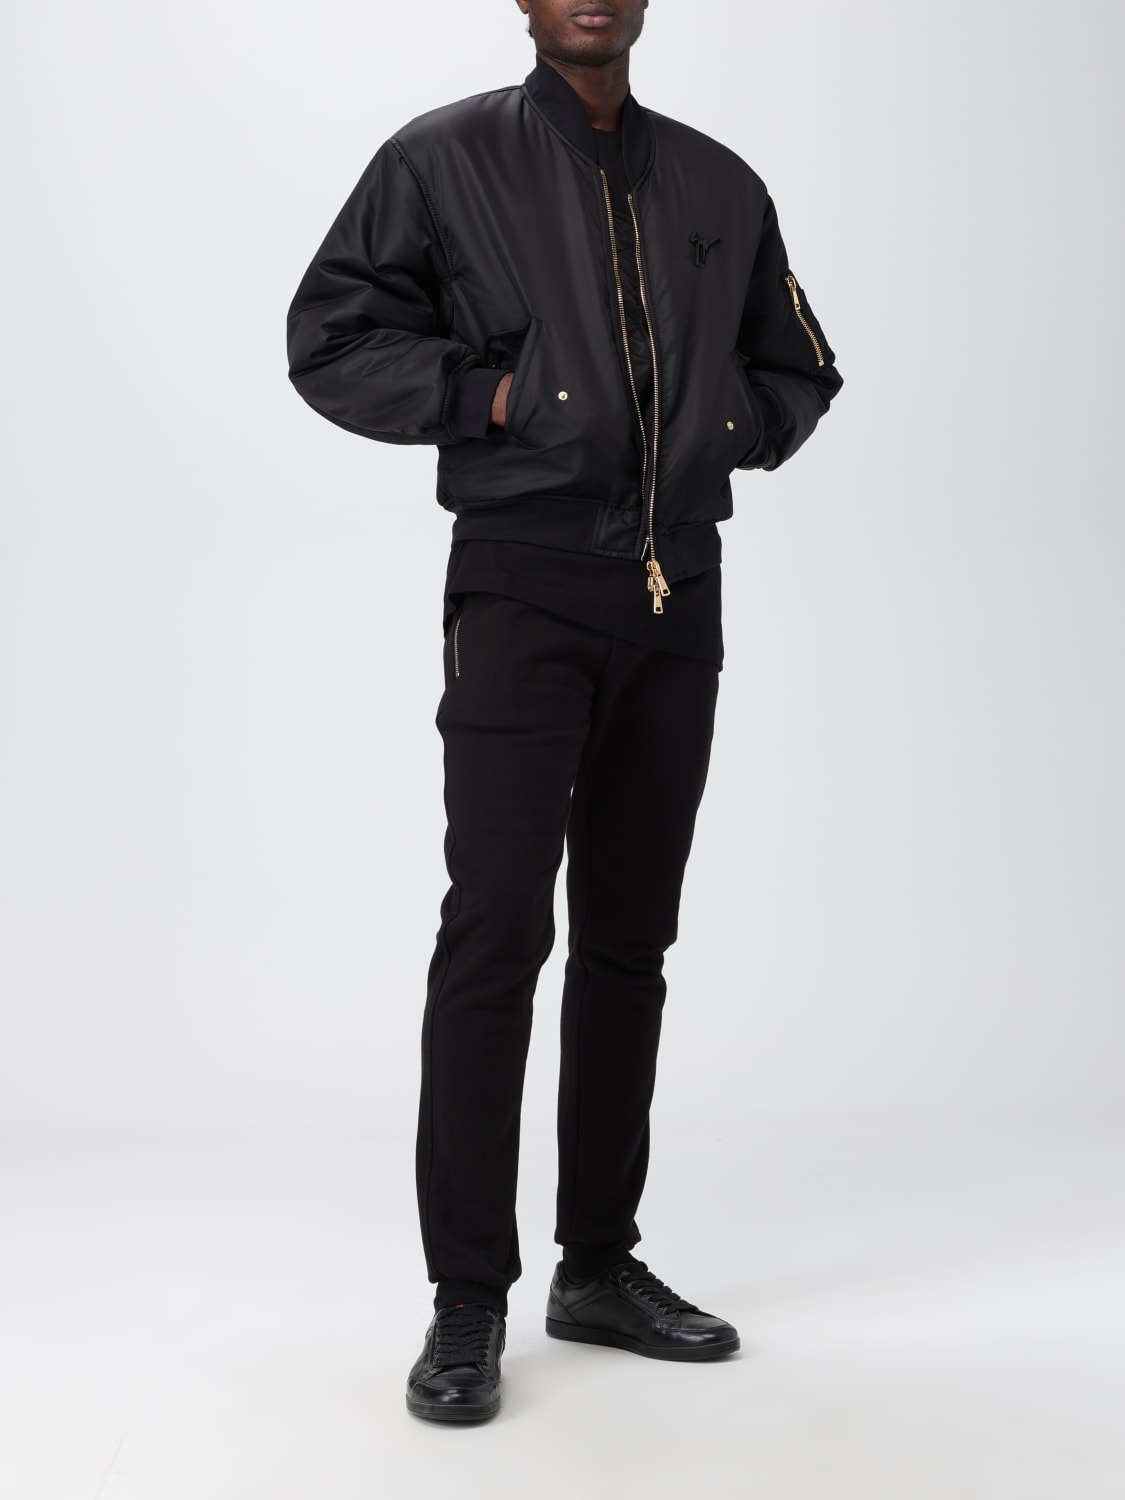 GIUSEPPE ZANOTTI: jacket for man - Black | Giuseppe Zanotti jacket ...